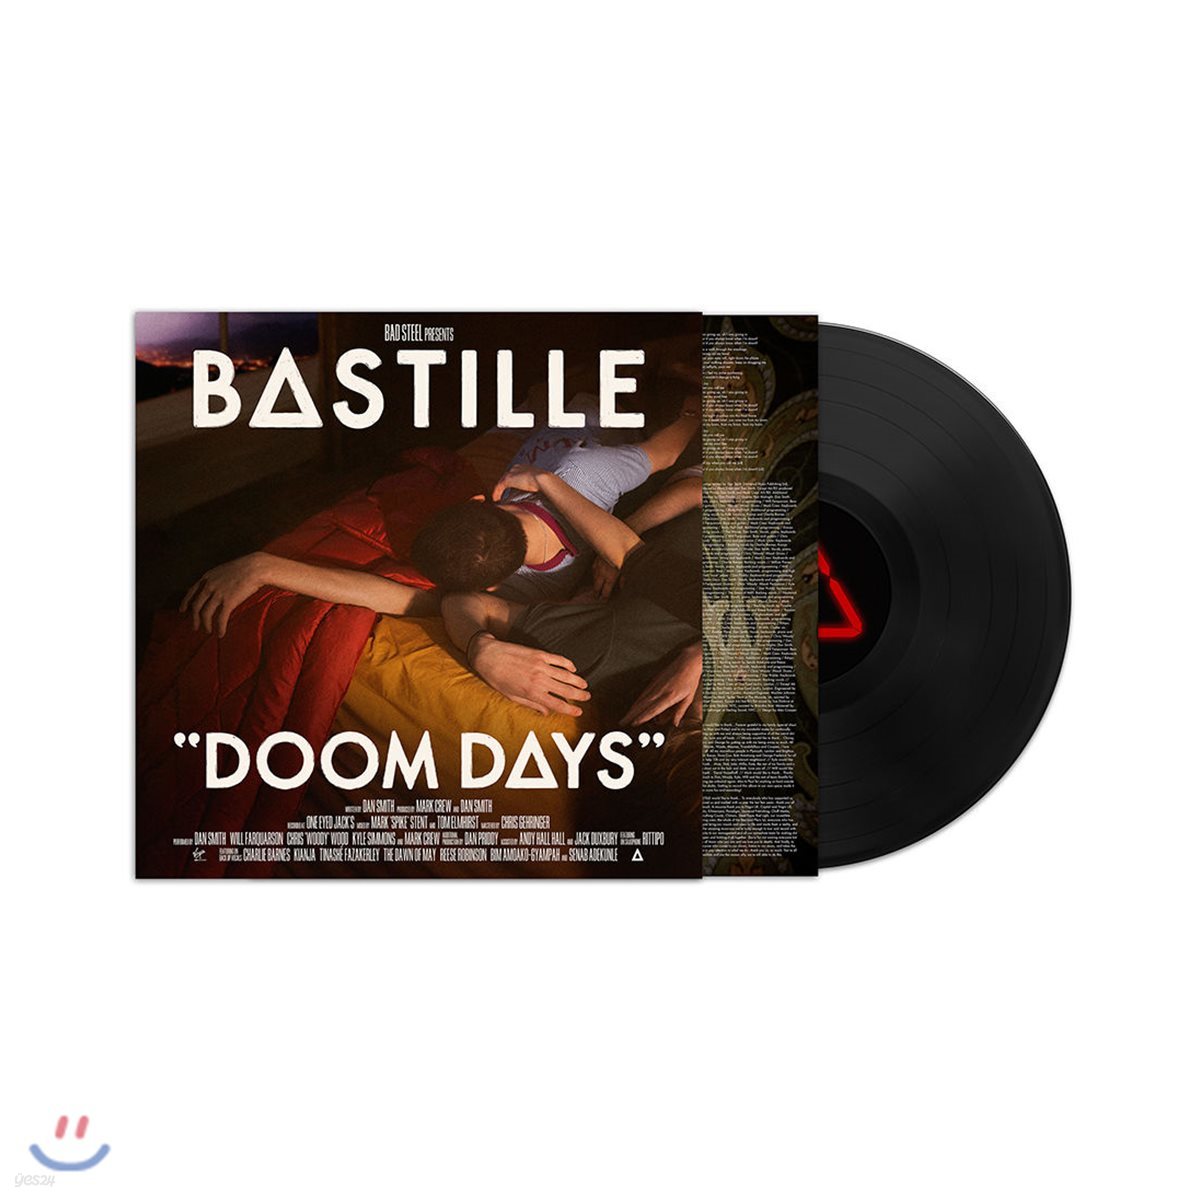 Bastille (바스틸) - Doom Days 3집 [LP]